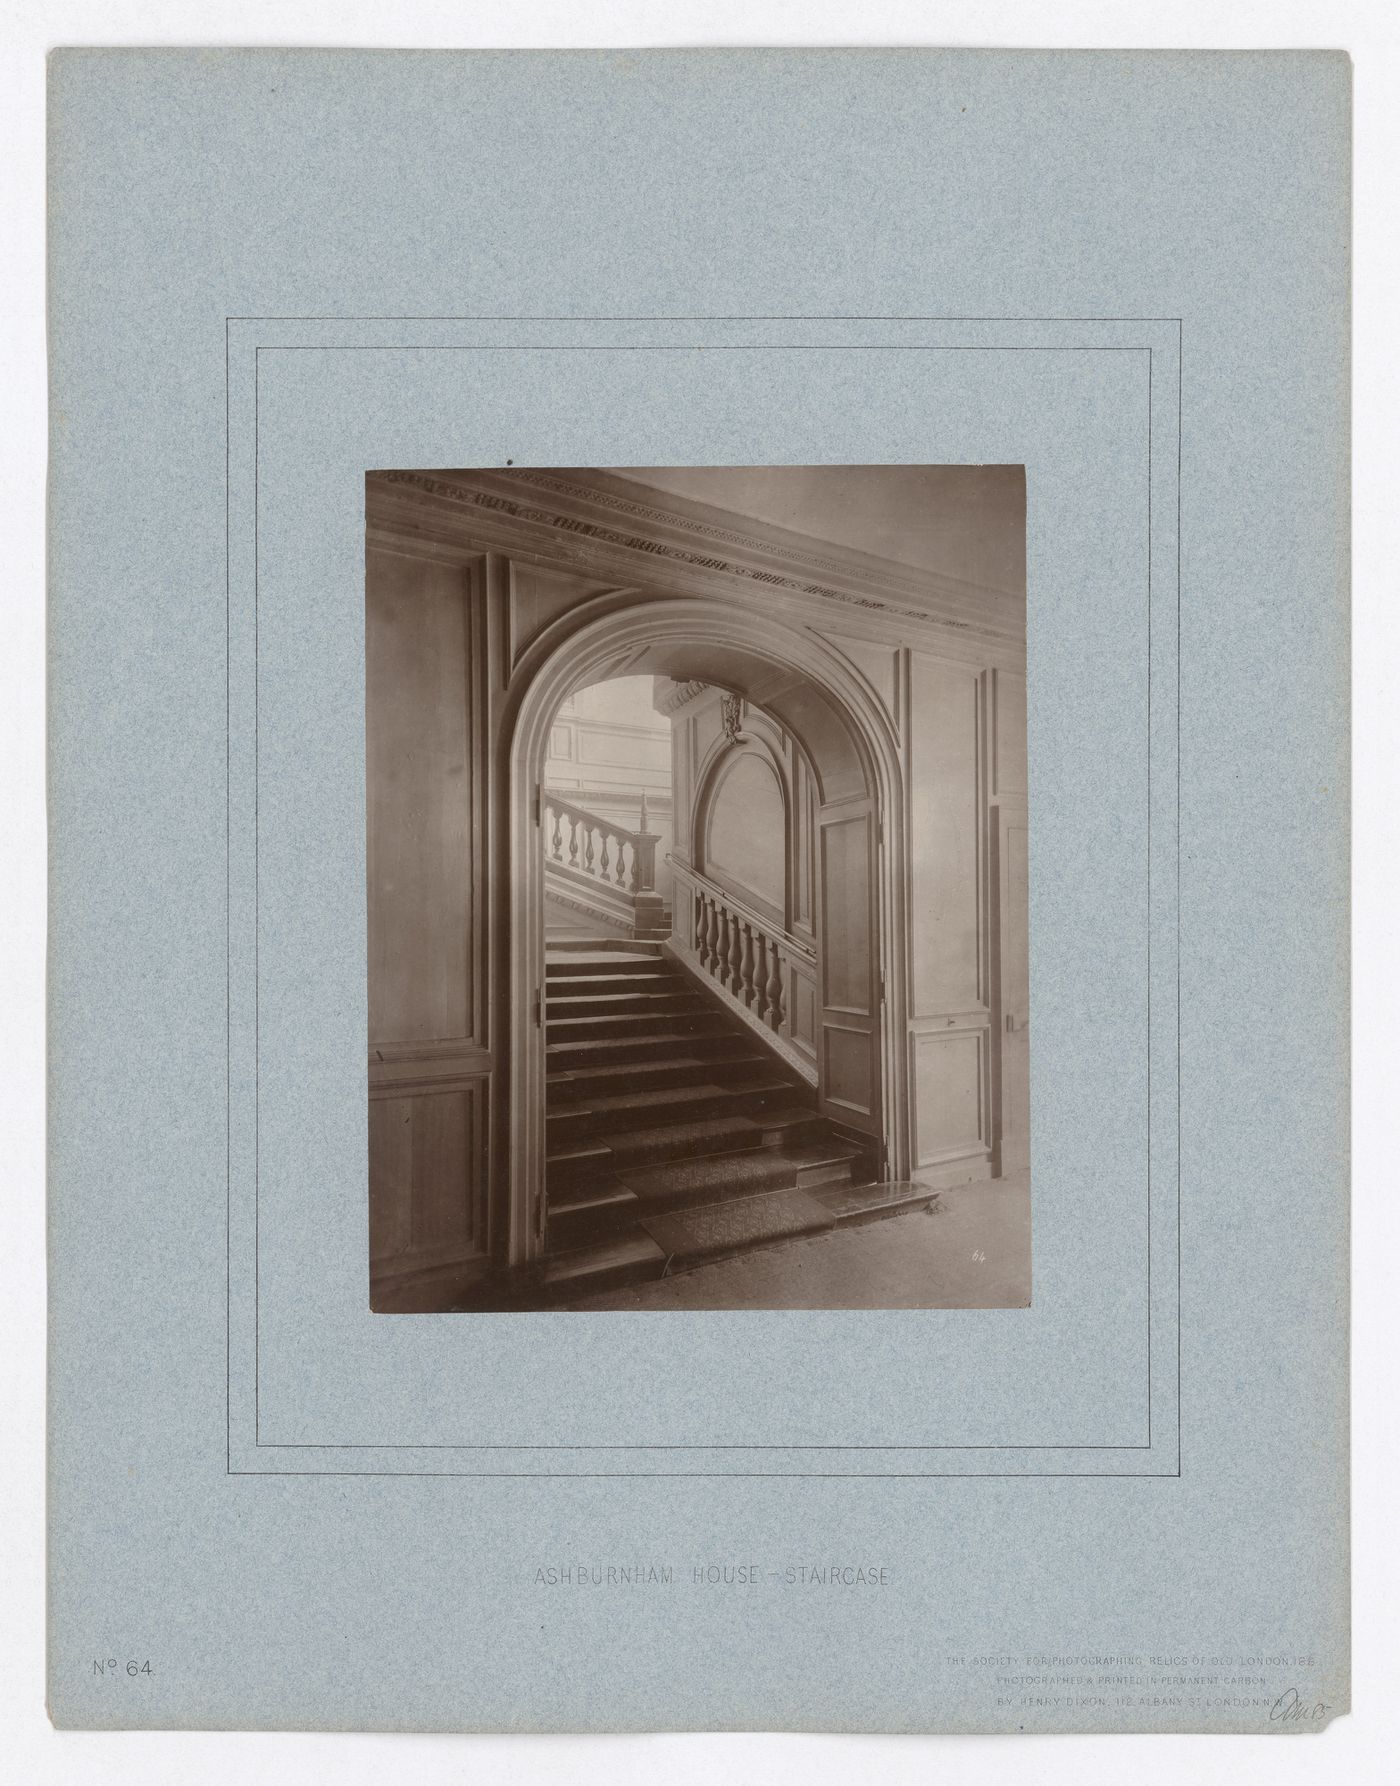 Ashburnham house - Staircase